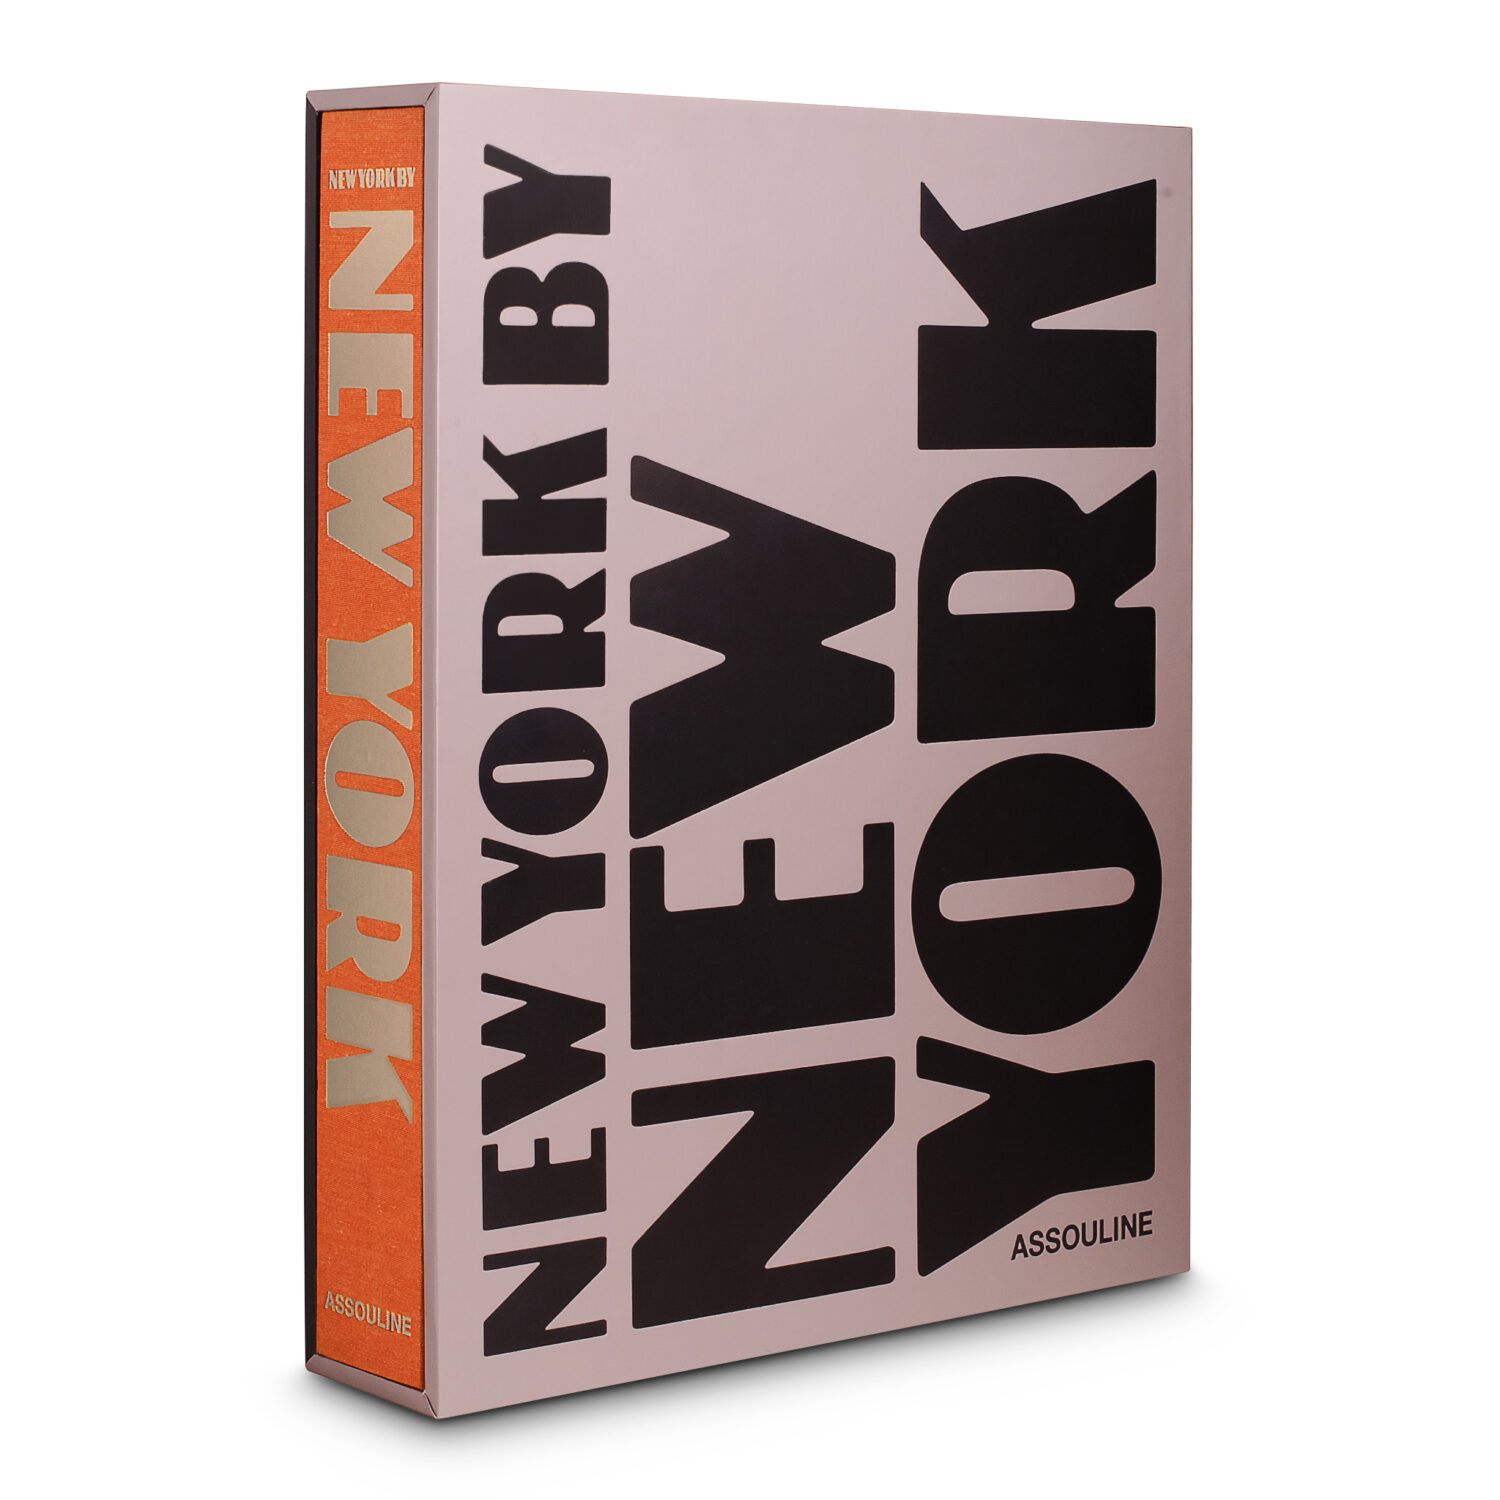 New York by New York, assouline.com